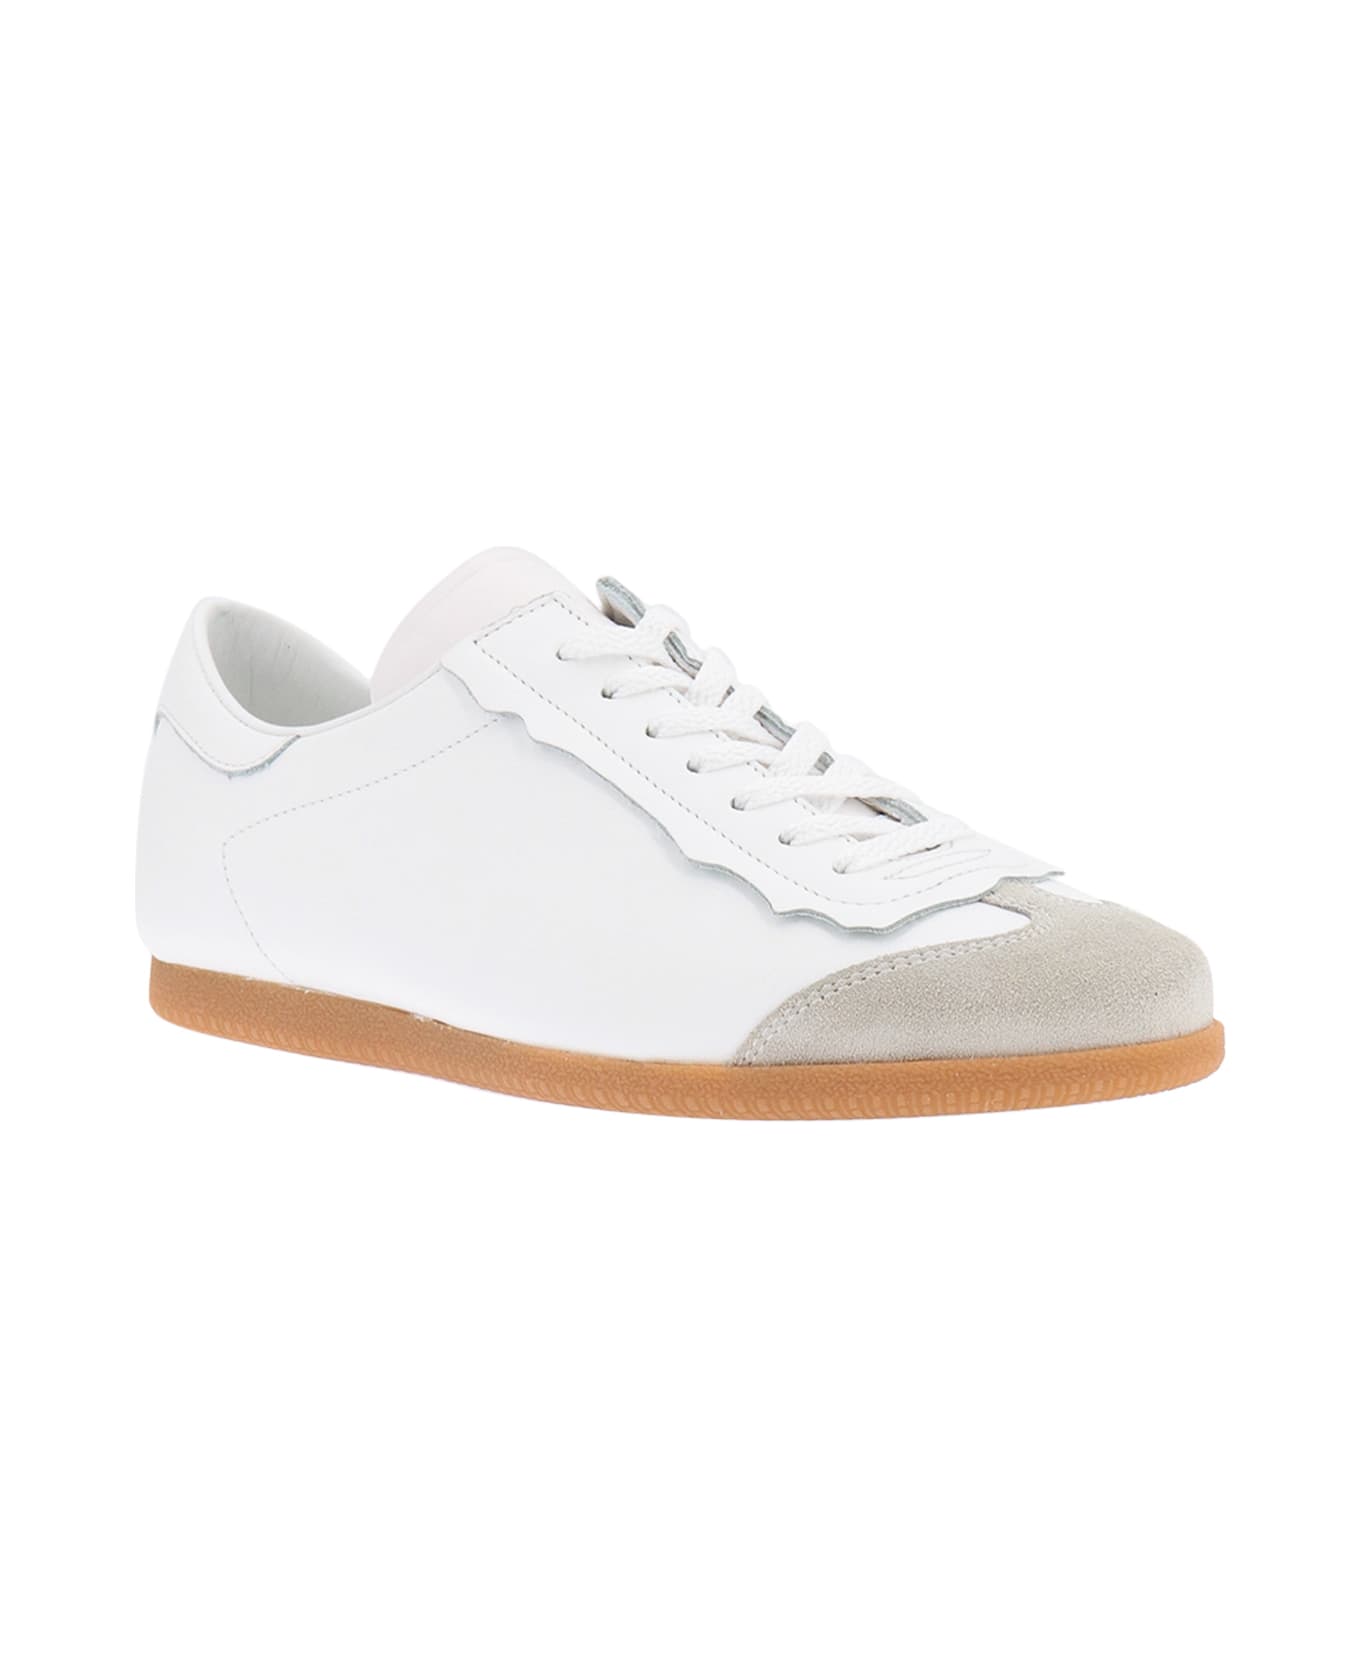 Maison Margiela Featherlight Sneakers - White